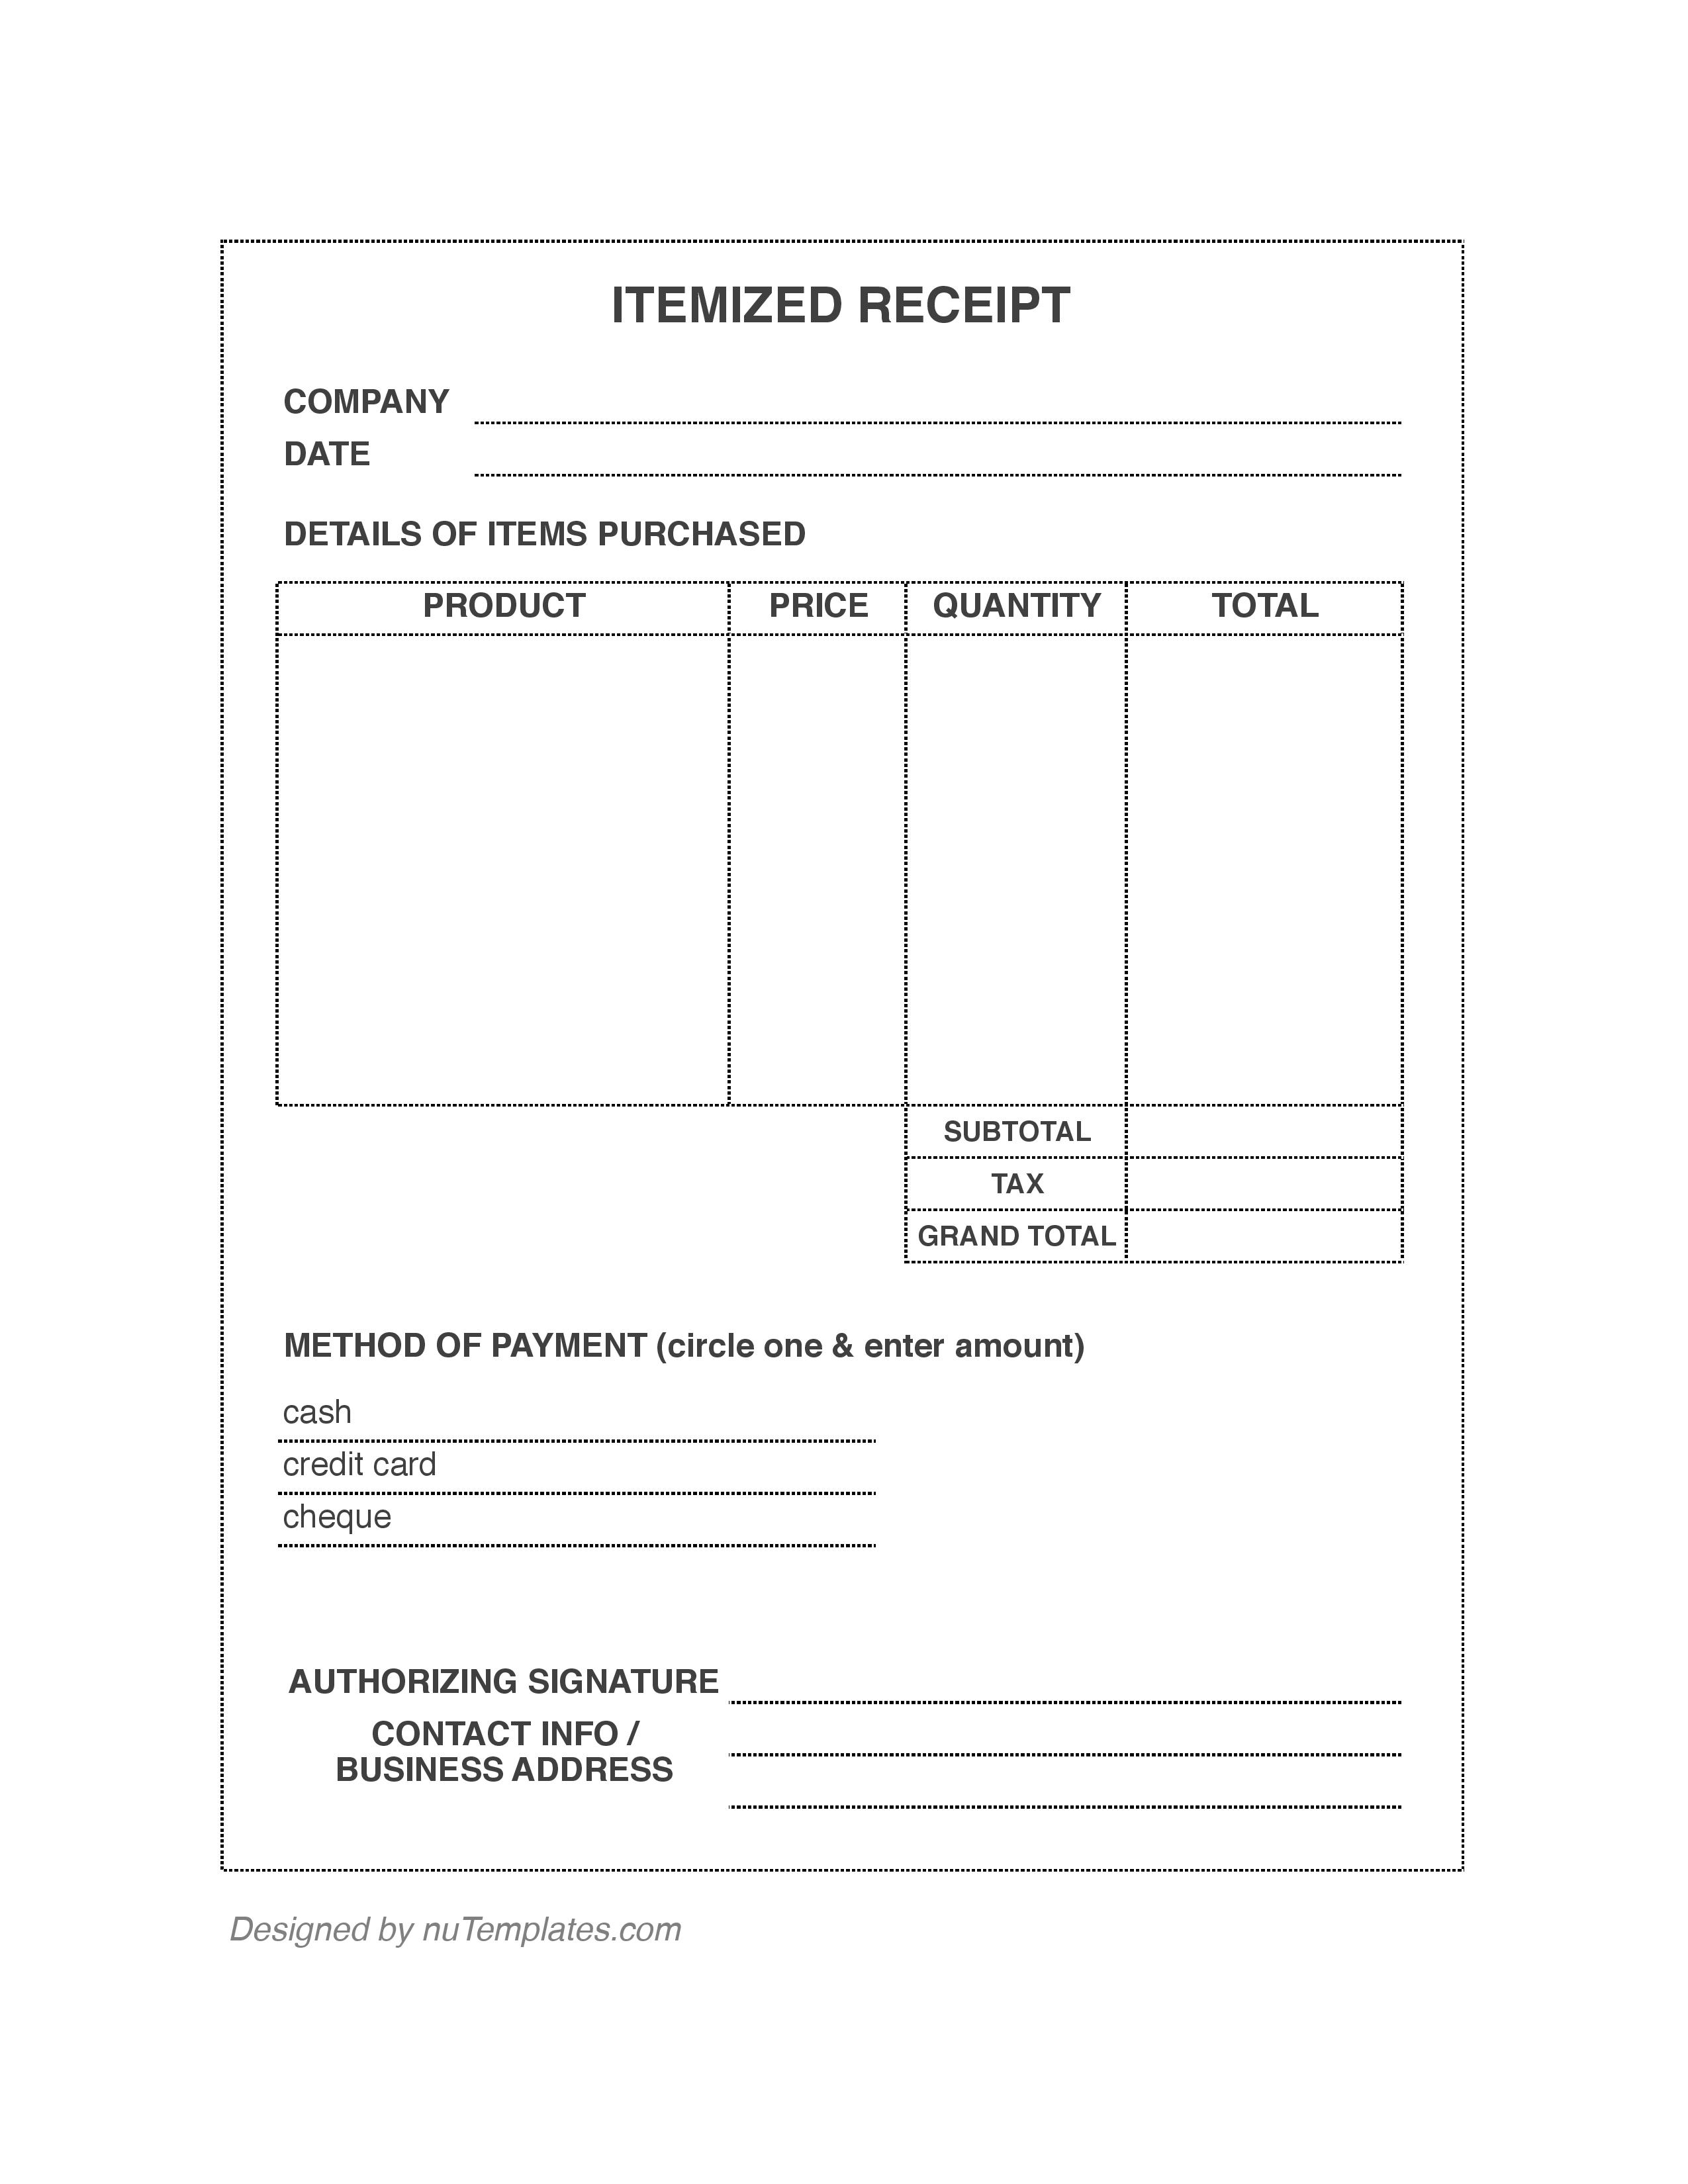 itemized-receipt-template